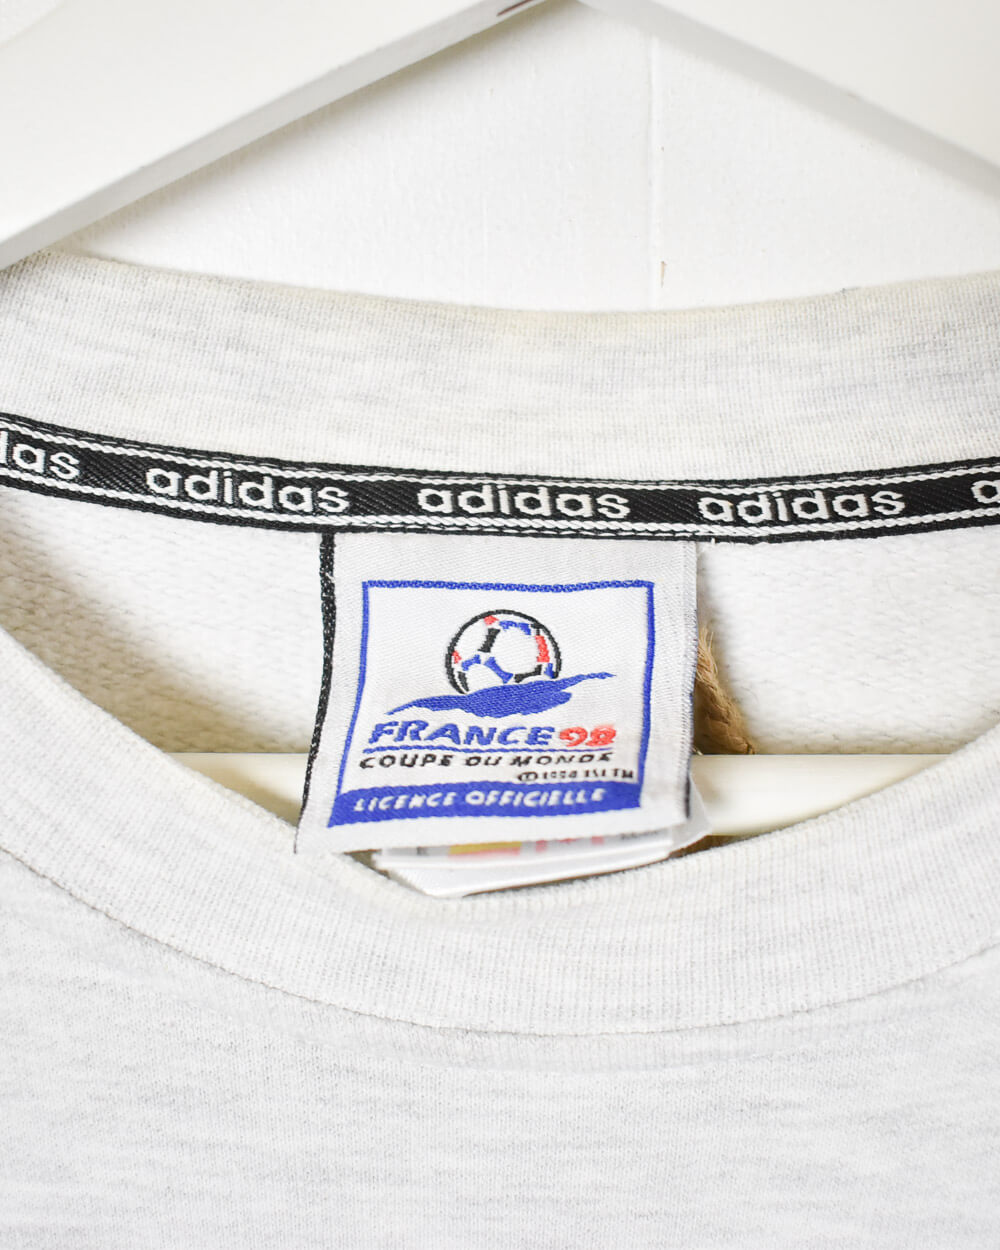 Stone Adidas France 1998 Sweatshirt - Medium